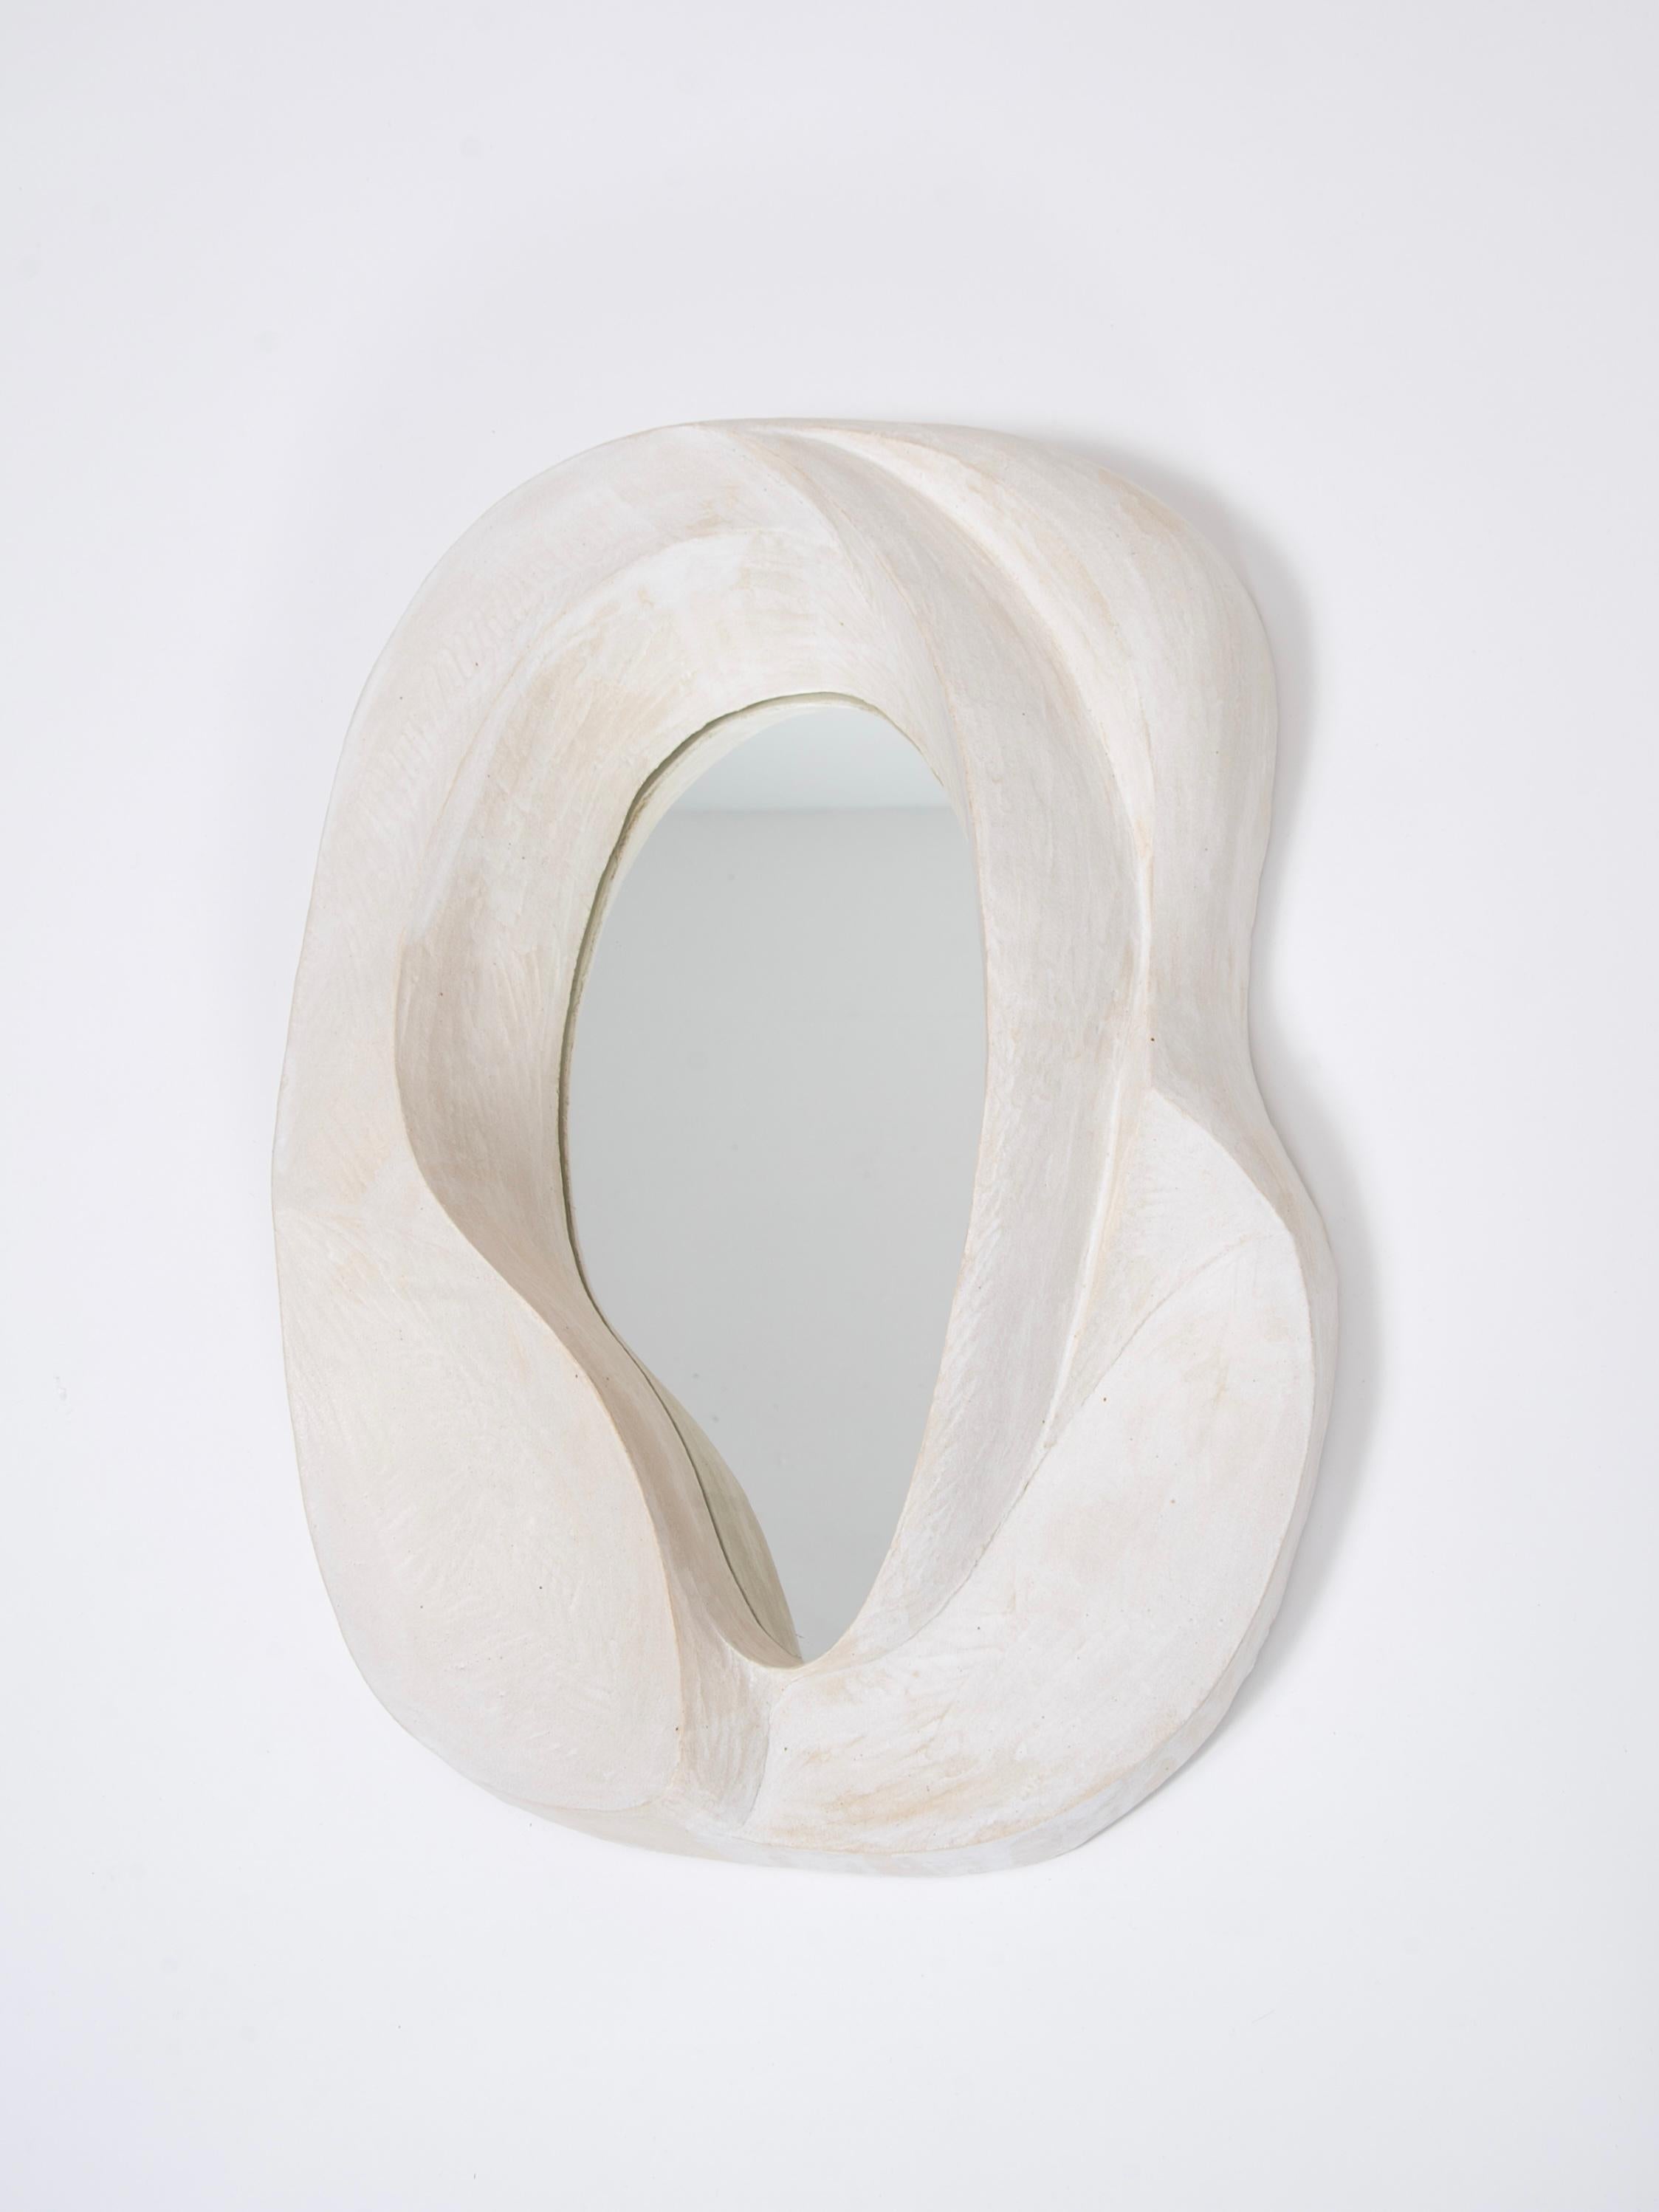 Hand-Crafted Contemporary Ceramic Mirror by Natasha Dakhli For Sale